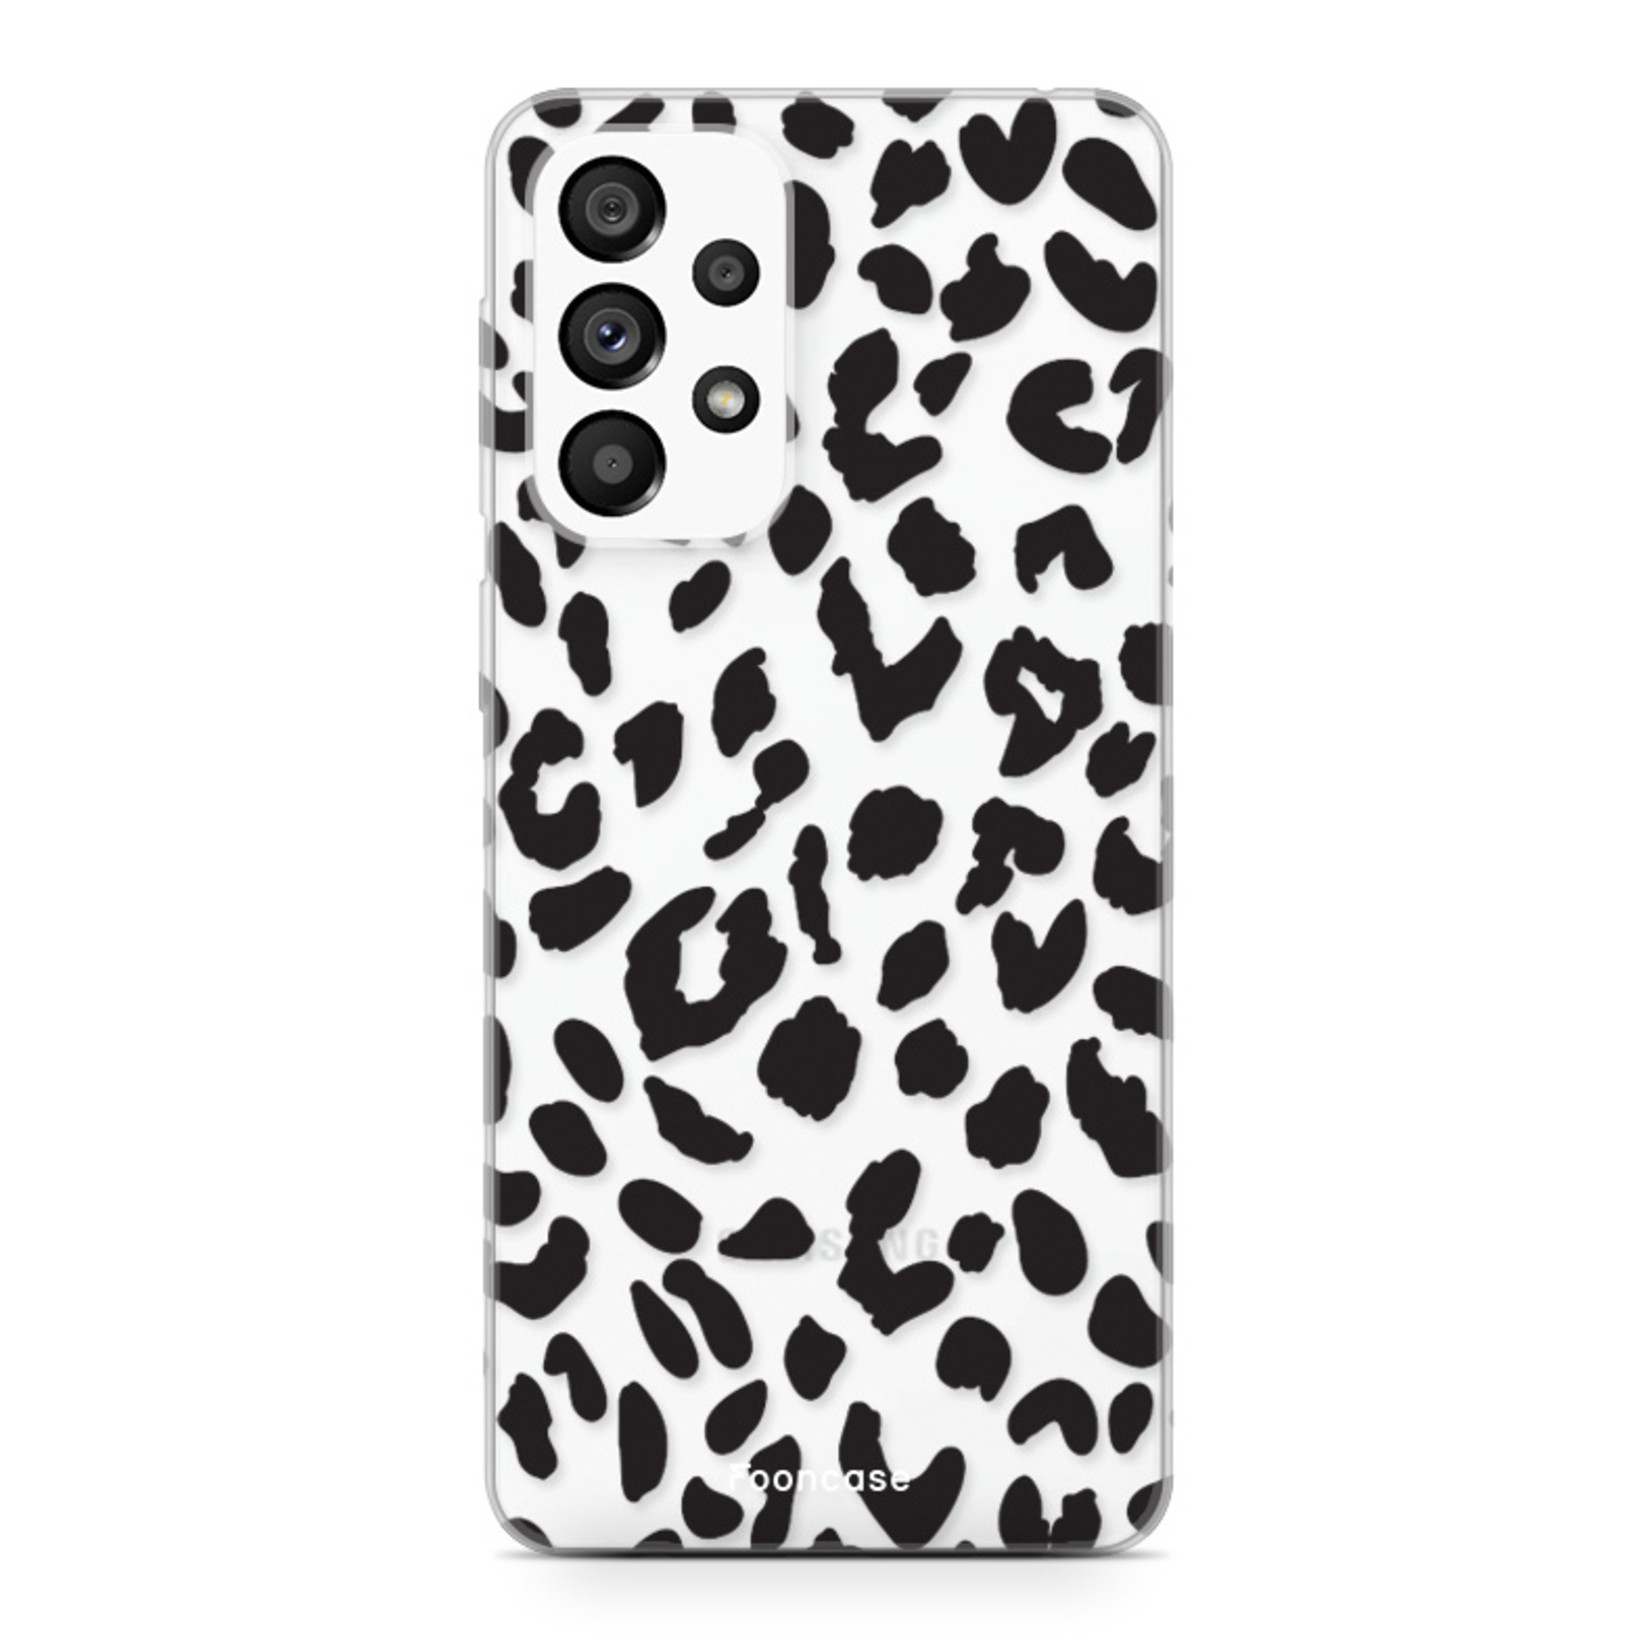 Samsung Galaxy A52 / A52s hoesje TPU Soft Case - Back Cover - Luipaard / Leopard print